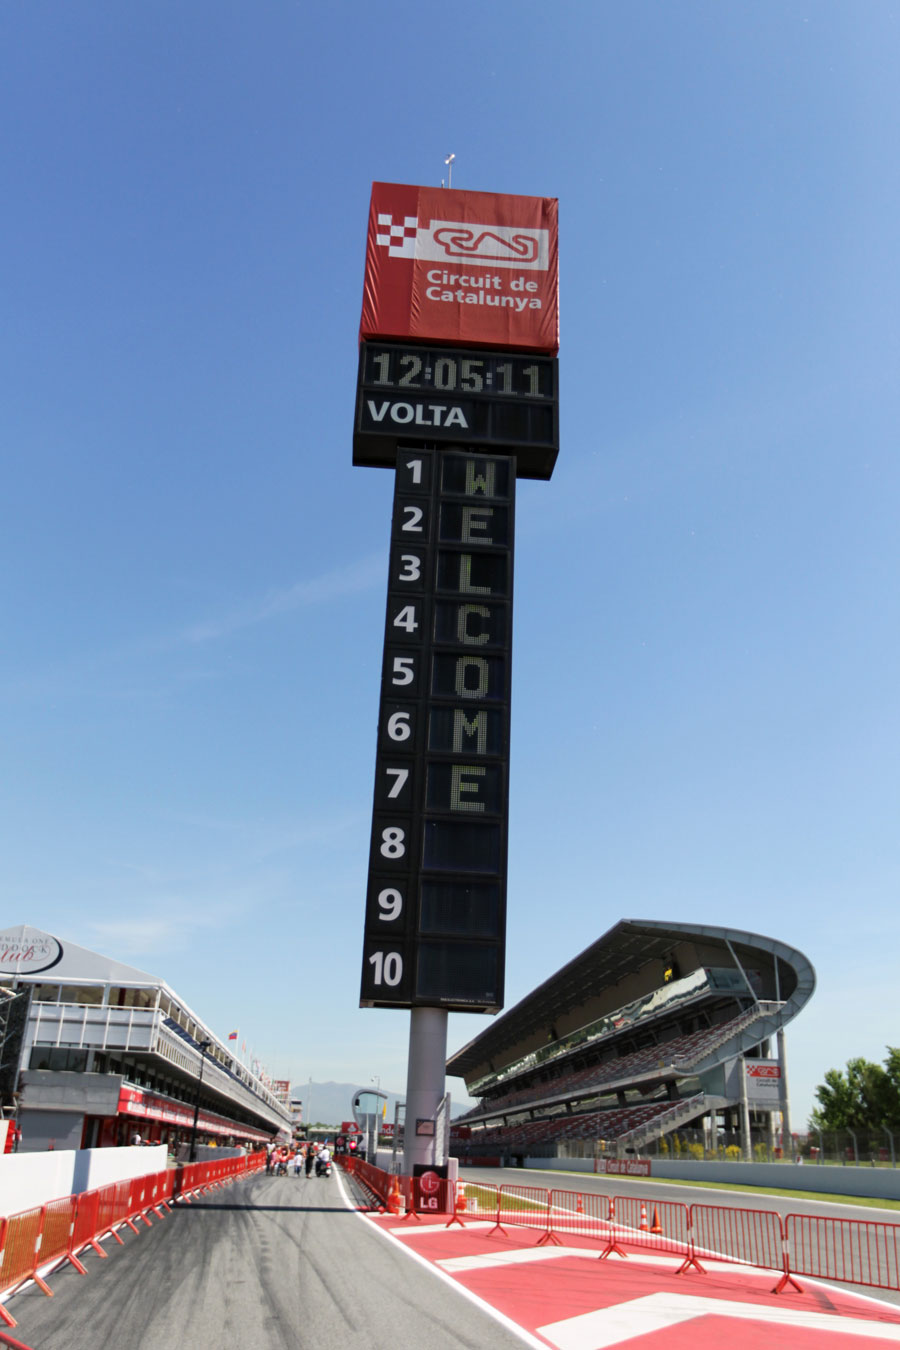 The Circuit de Catalunya leaderboard welcomes the F1 paddock